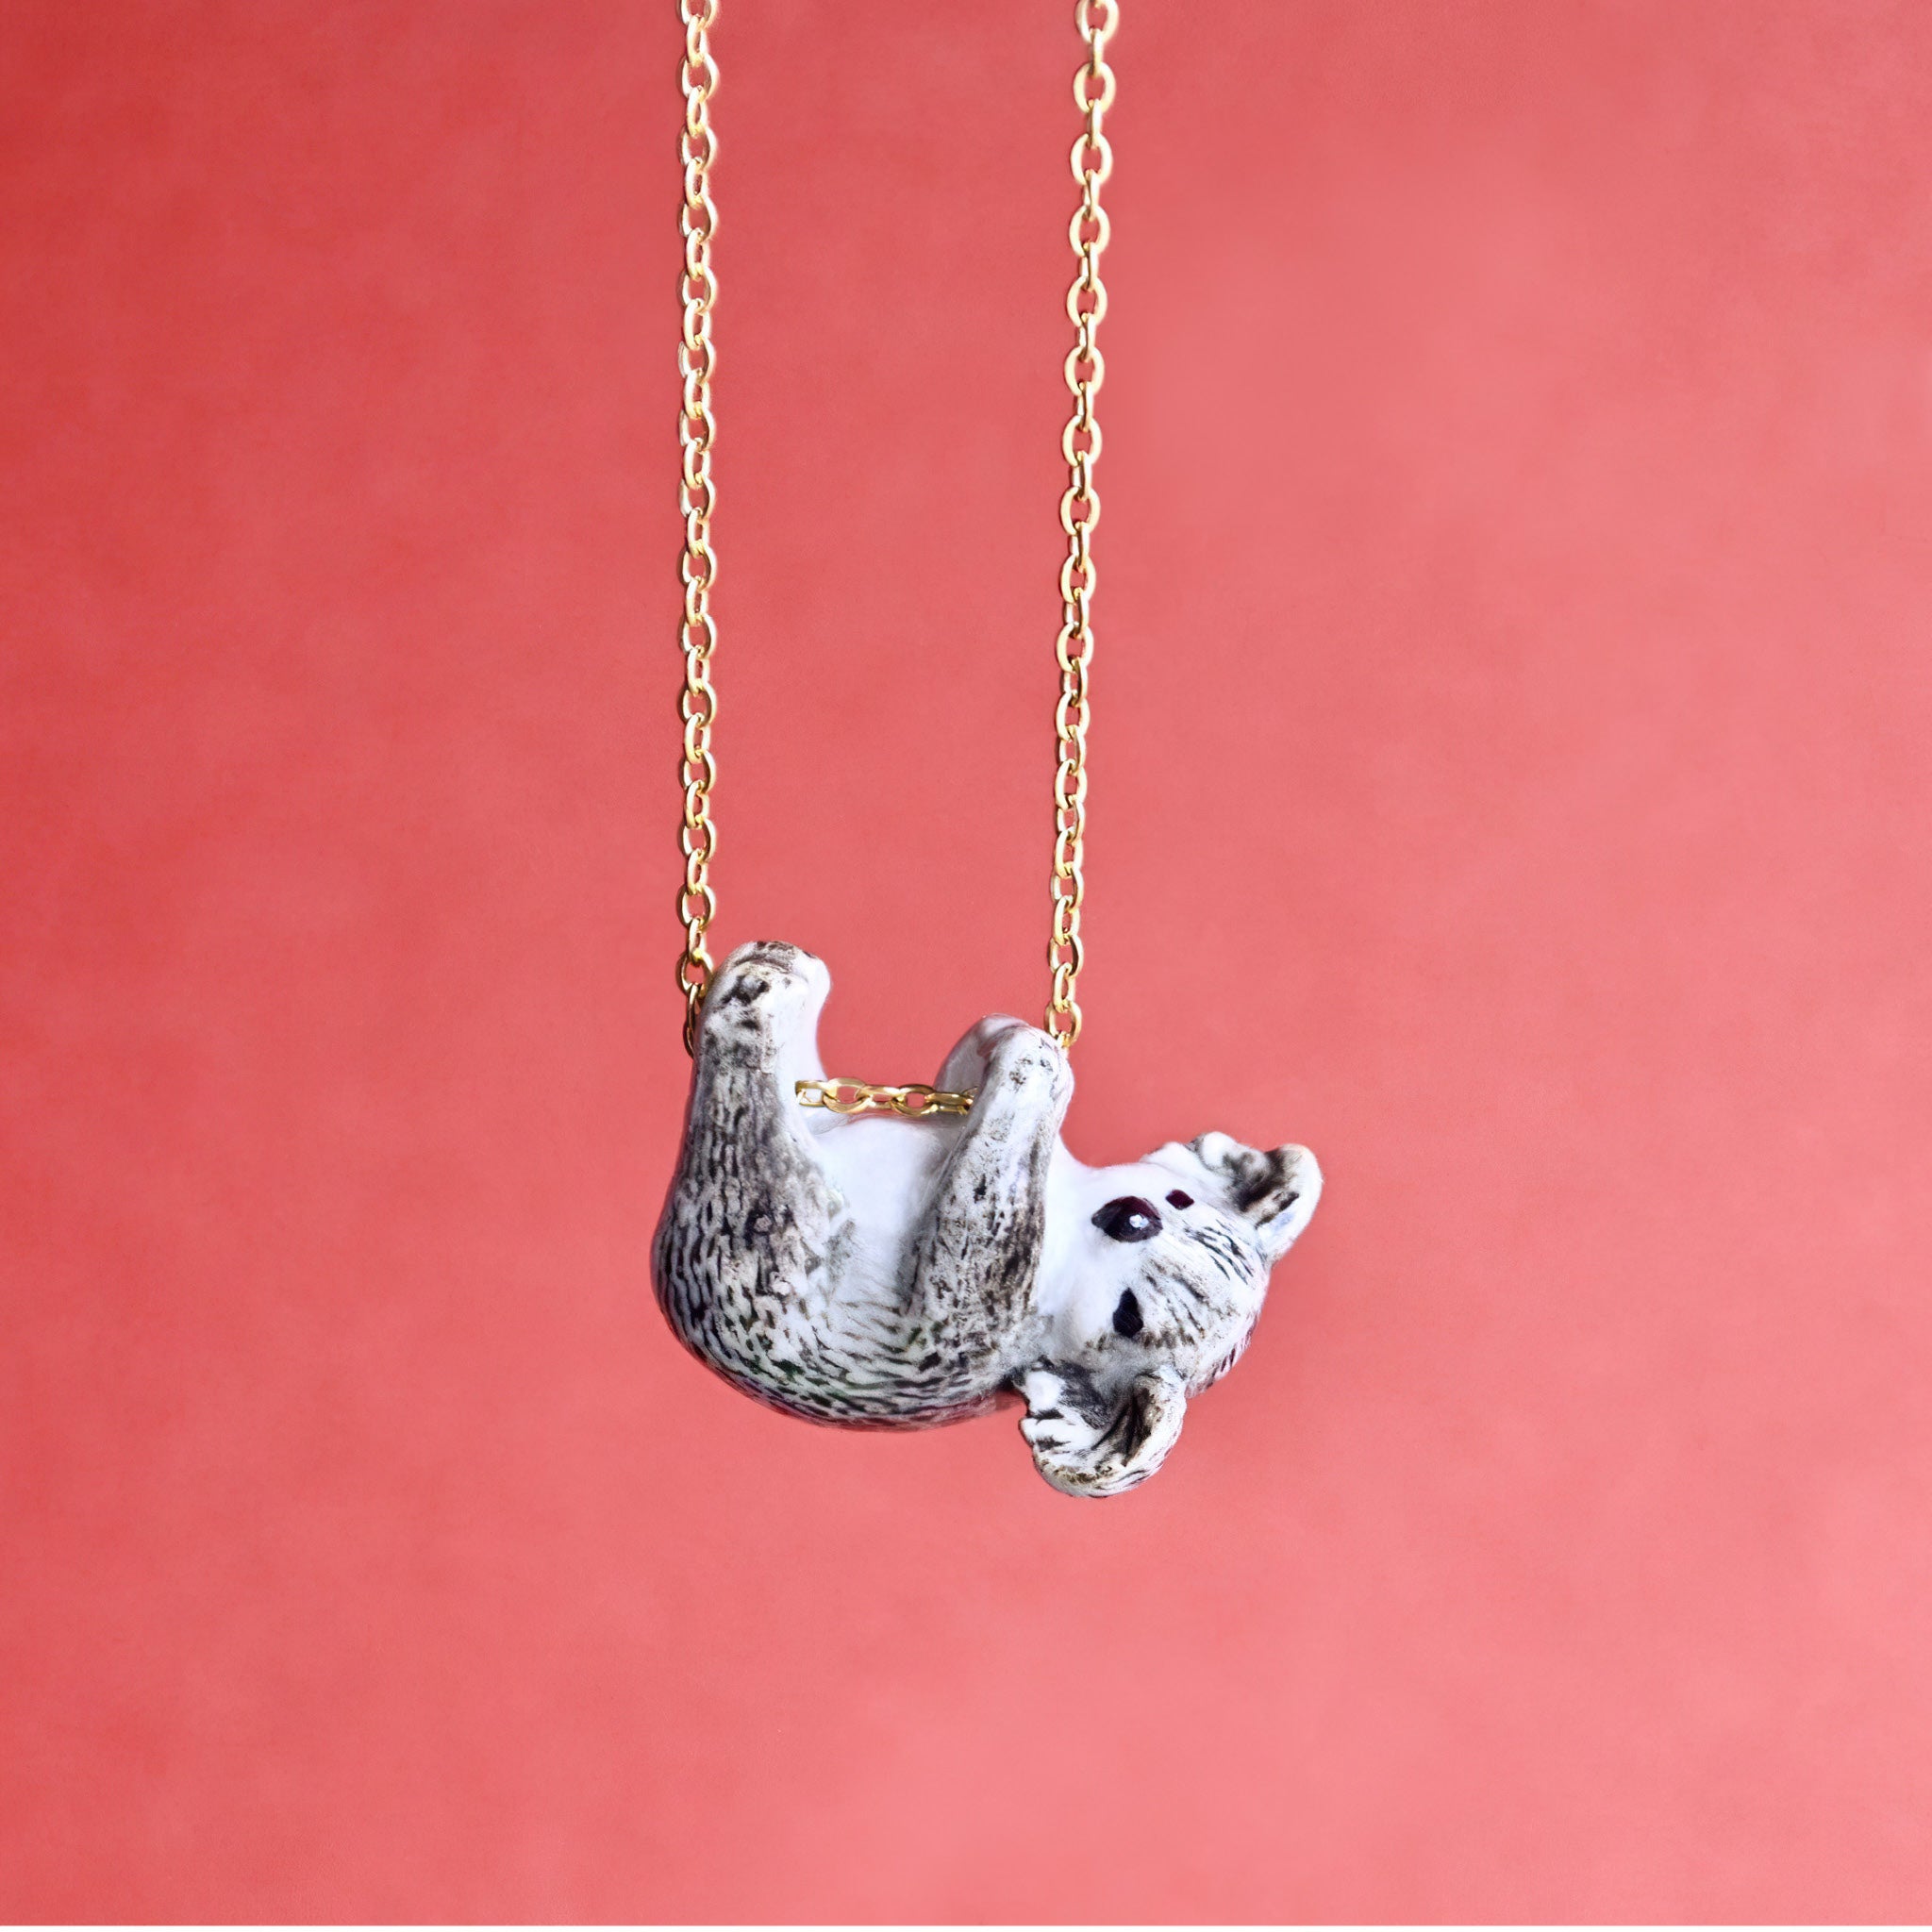 Koala Necklace | Camp Hollow Ceramic Animal Jewelry